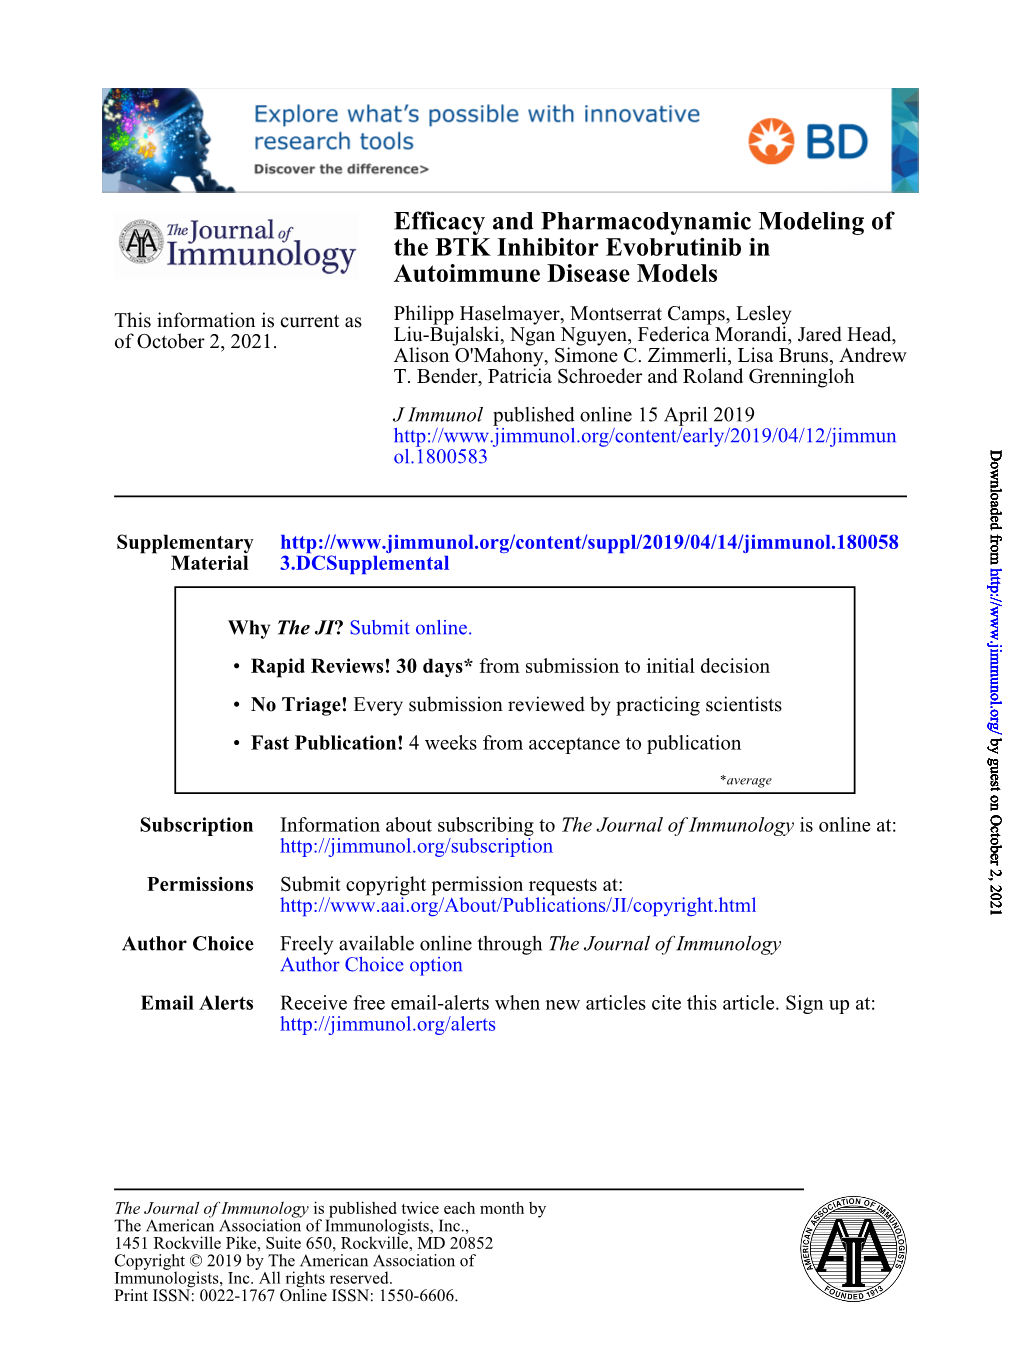 Efficacy and Pharmacodynamic Modeling of the BTK Inhibitor Evobrutinib in Autoimmune Disease Models